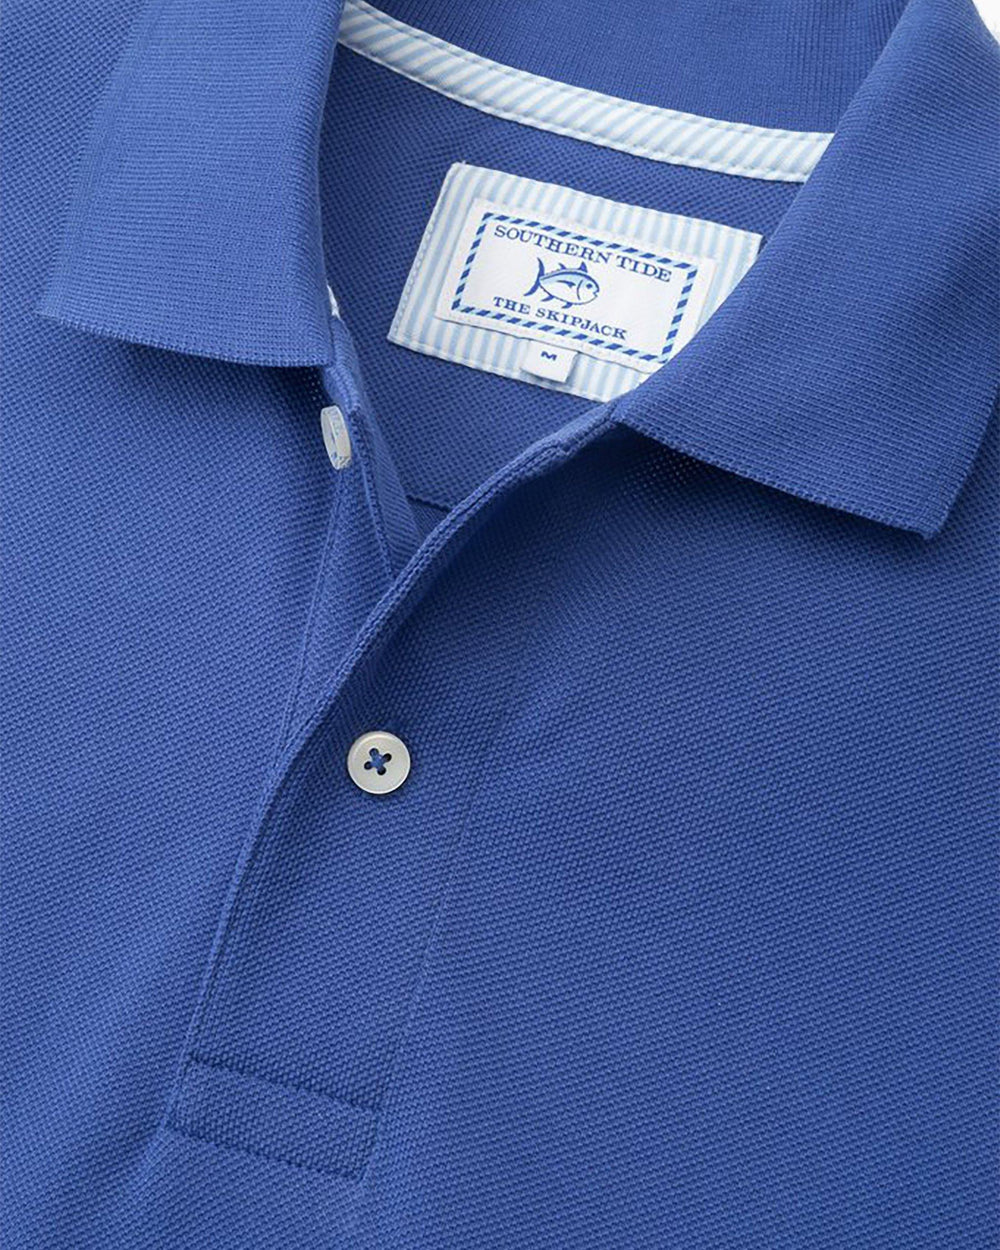 The detail of the Men's Light Blue Florida Gators Pique Polo Shirt by Southern Tide - University Blue